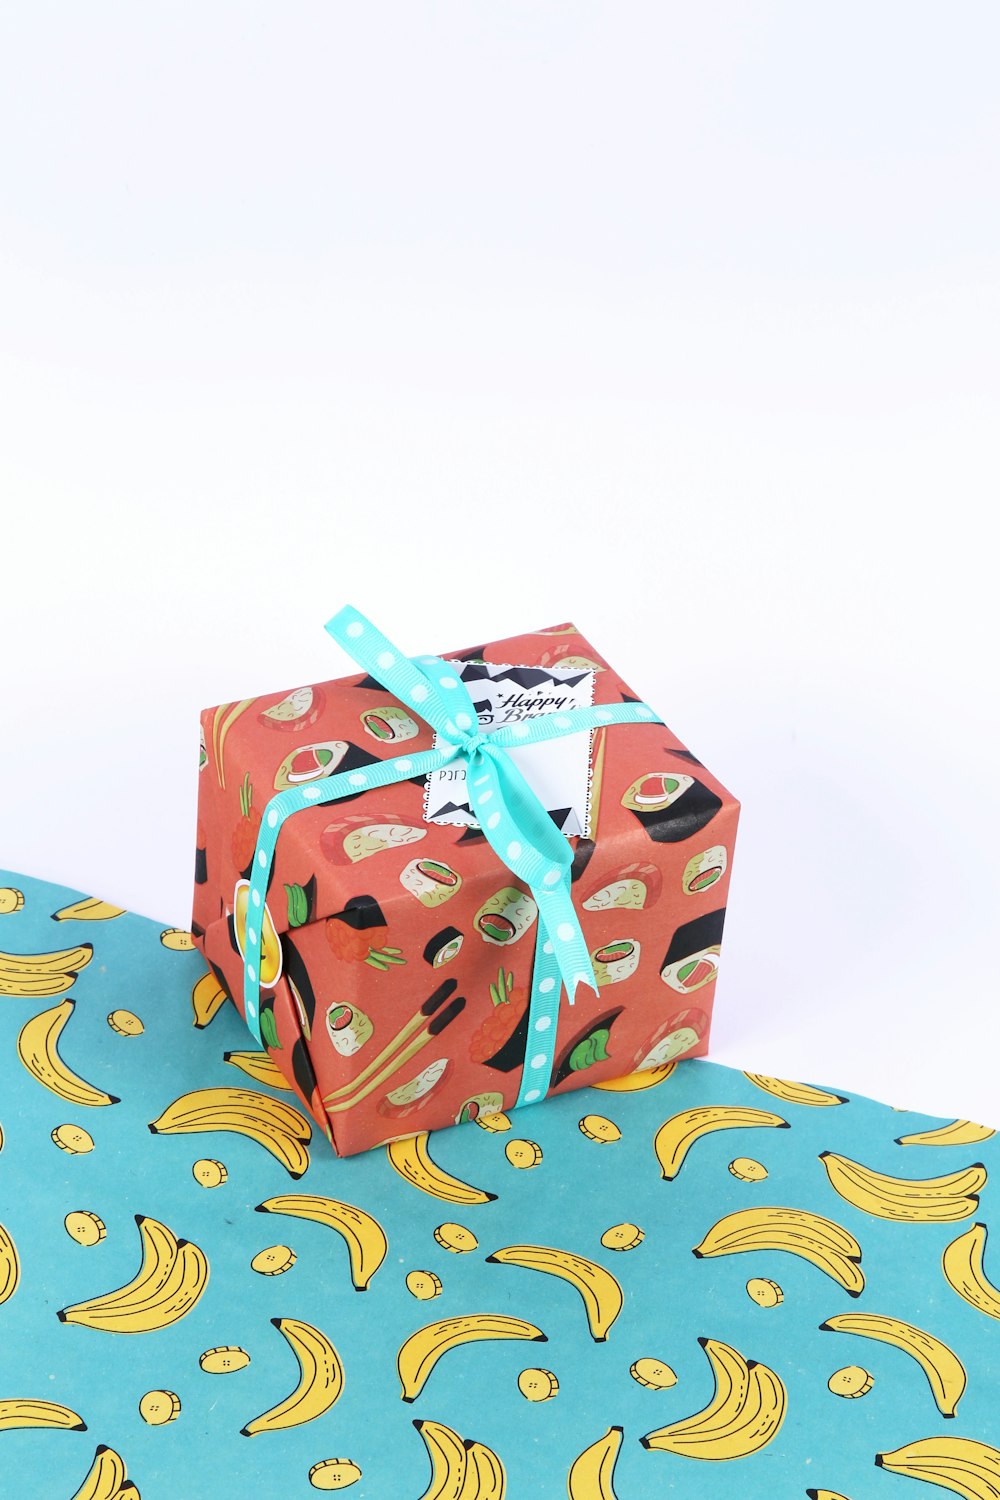 blue and white polka dot gift box